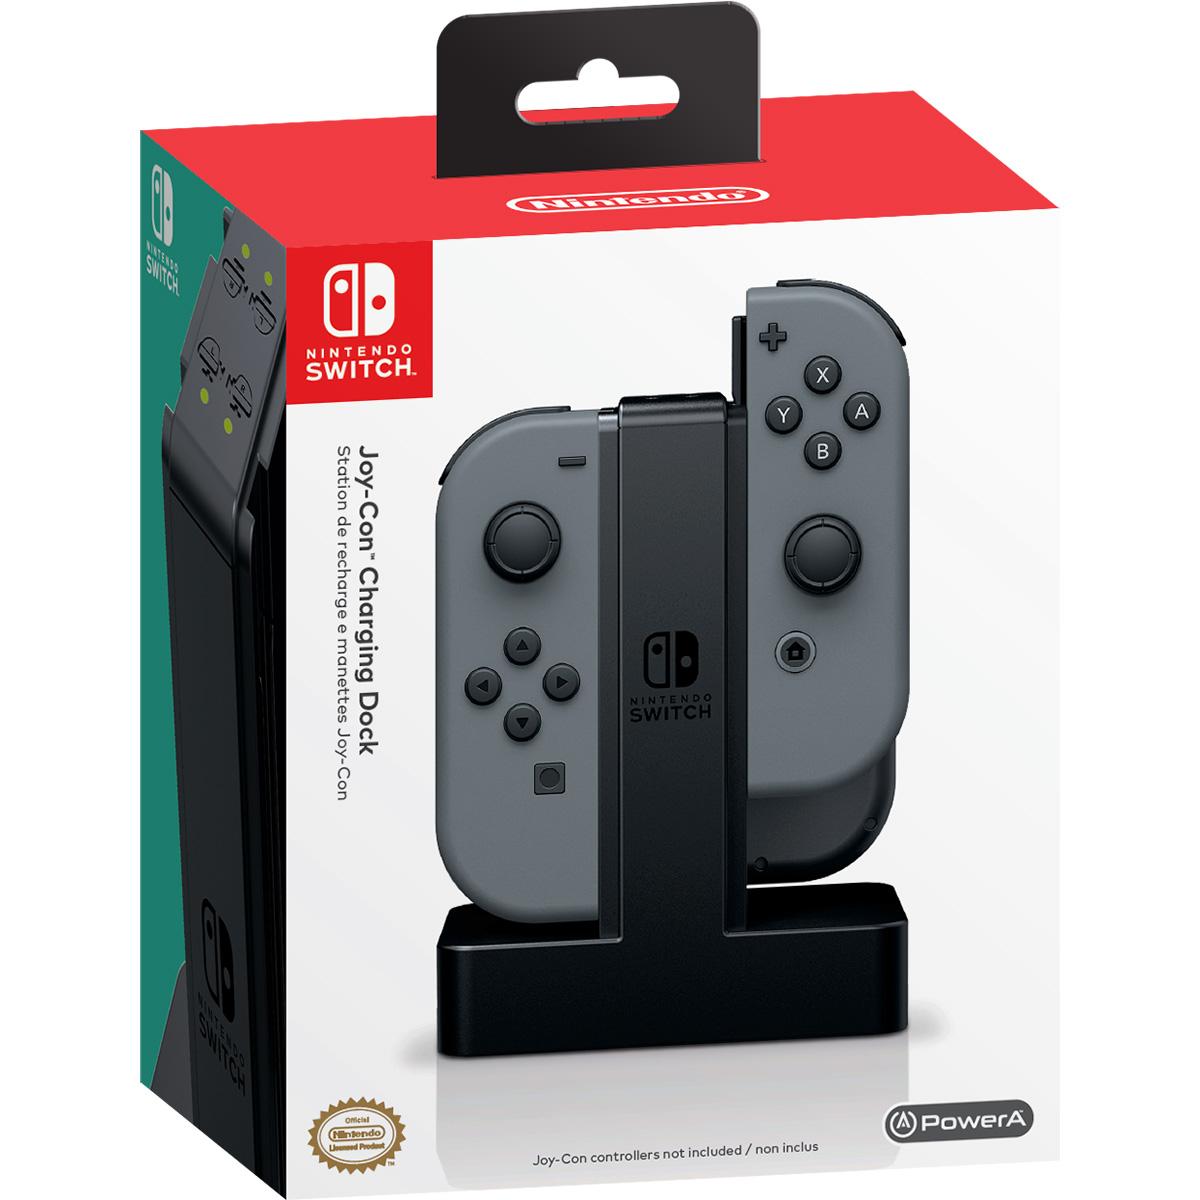 PowerA Nintendo Switch Joy-Con Charging Dock for $5.99